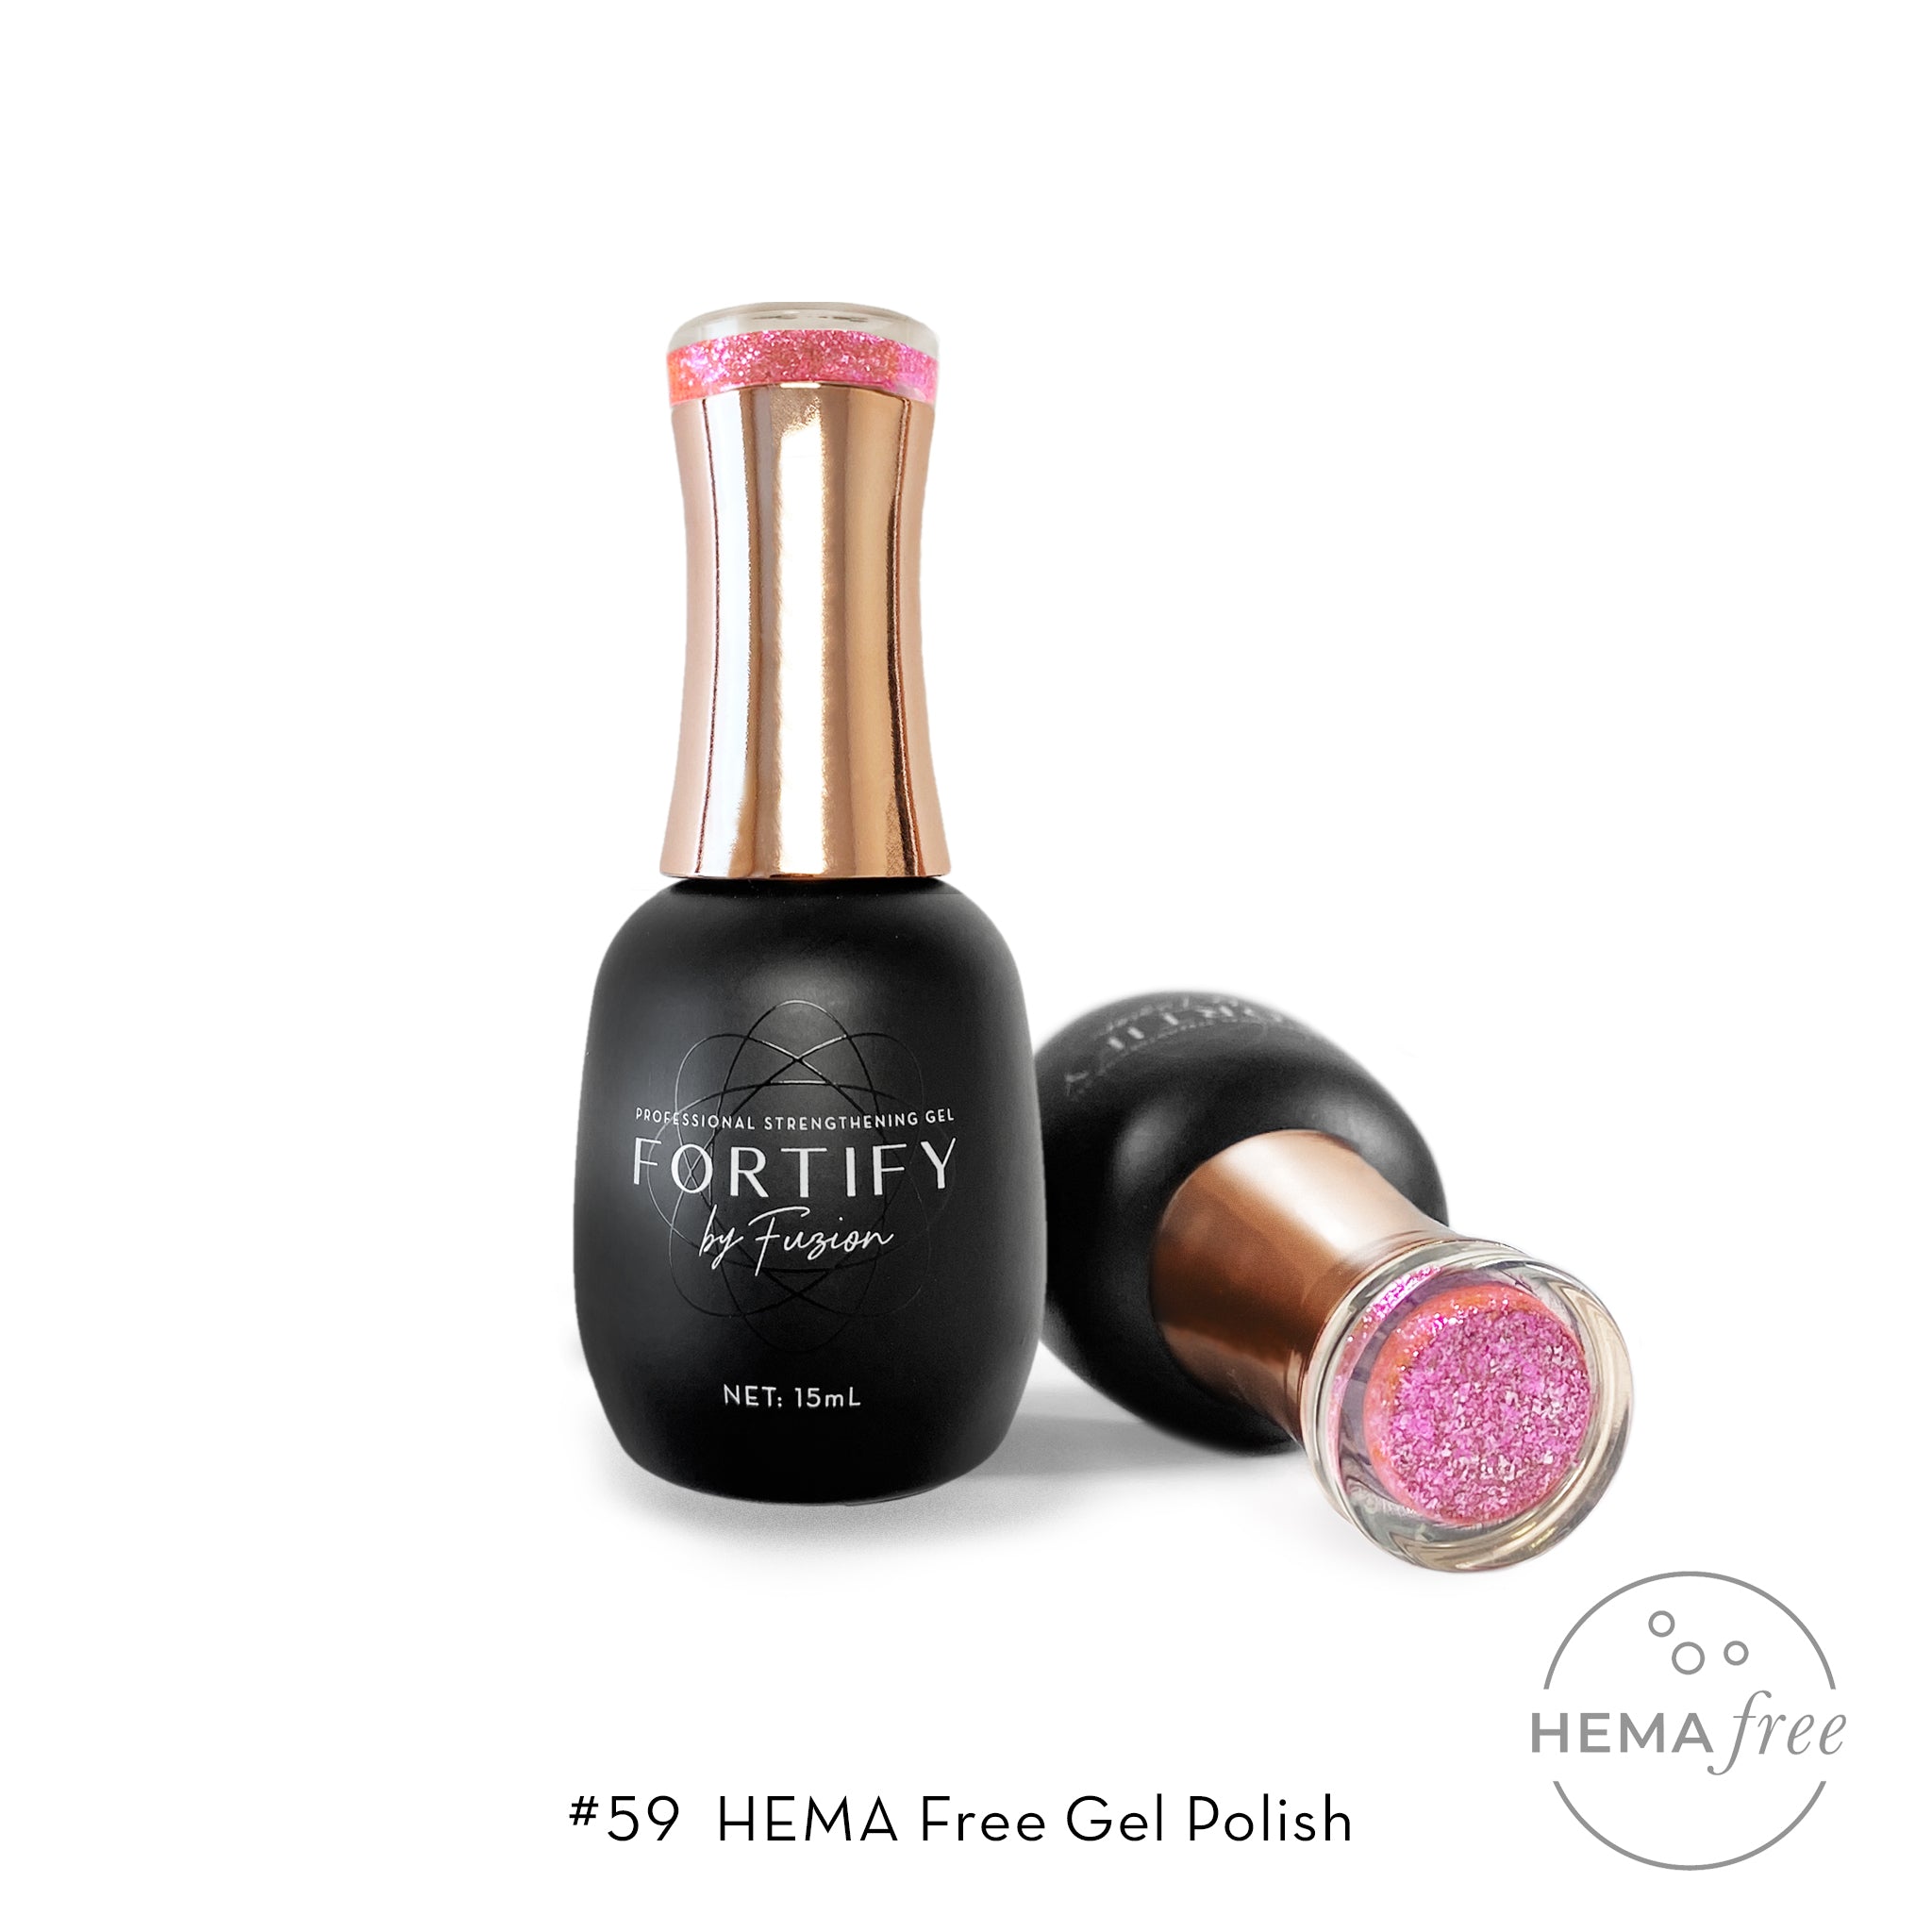 HEMA Free Gel Polish | Fortify by Fuzion | Colour 59